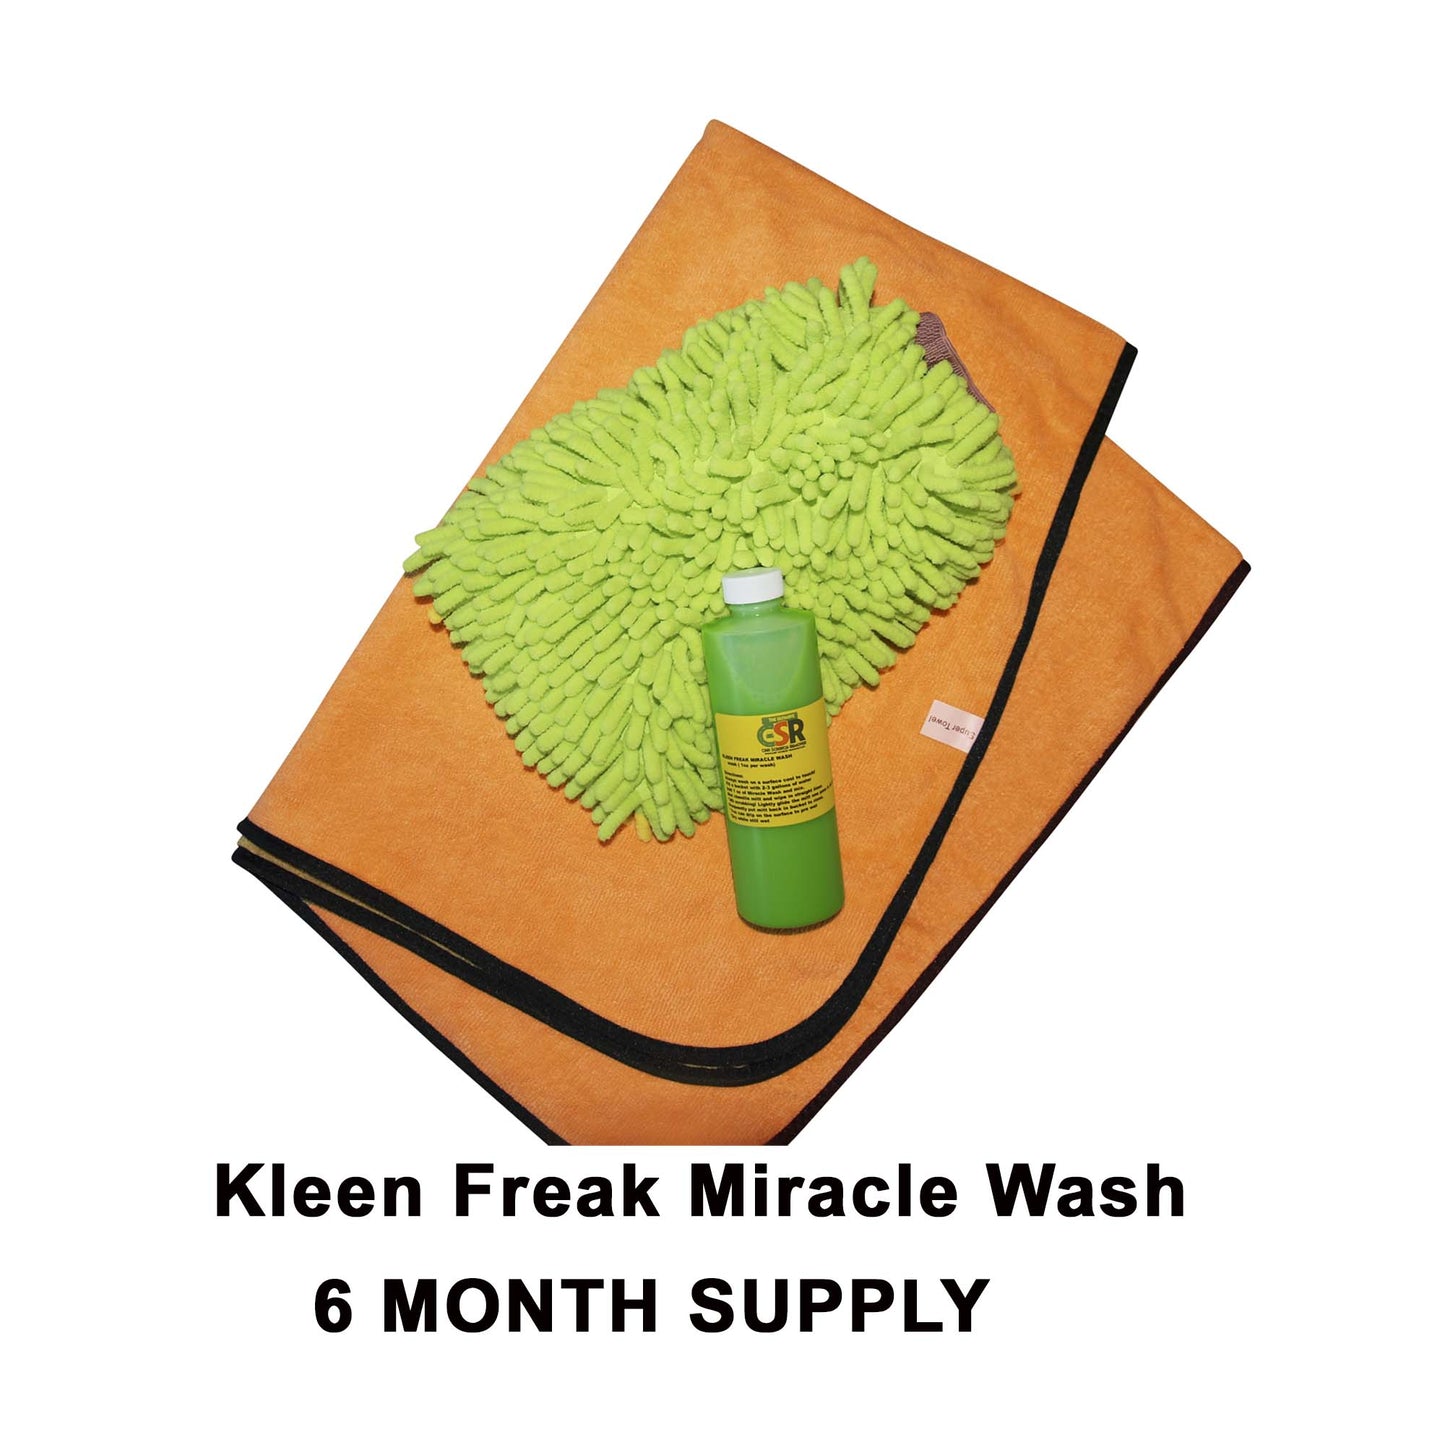 Kleen Freak Miracle Wash 6 Month Supply